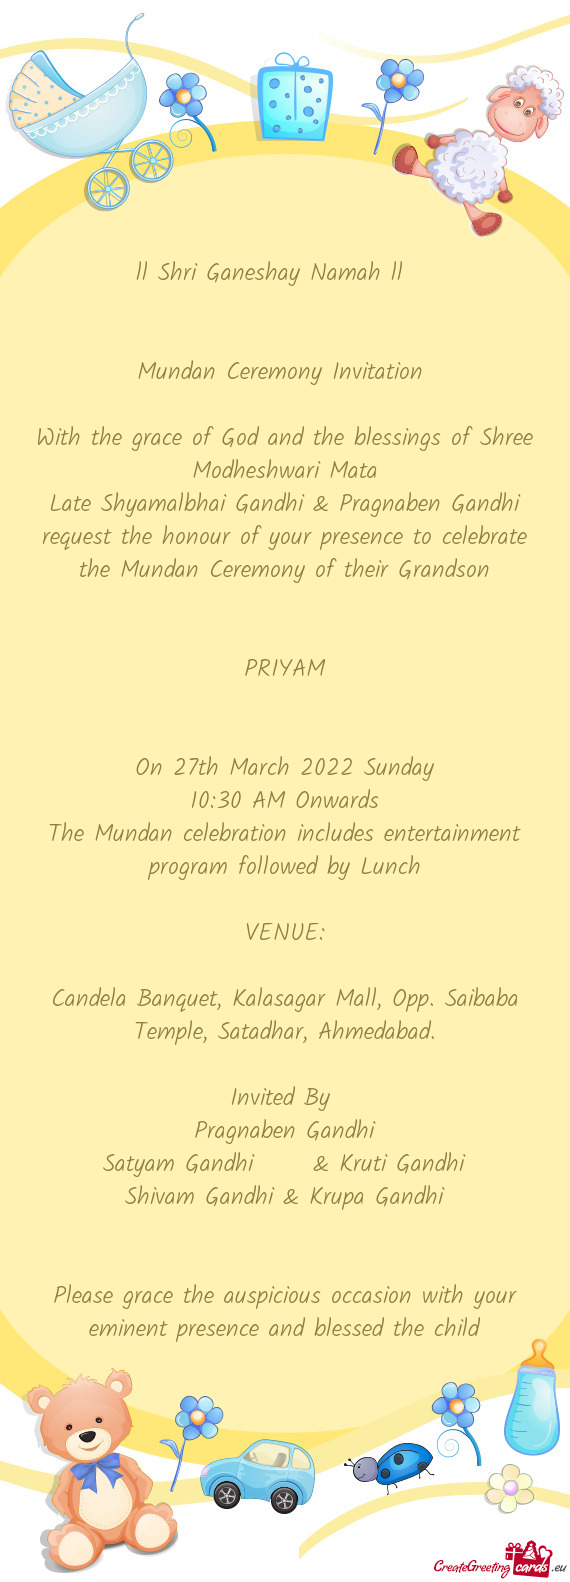 Candela Banquet, Kalasagar Mall, Opp. Saibaba Temple, Satadhar, Ahmedabad